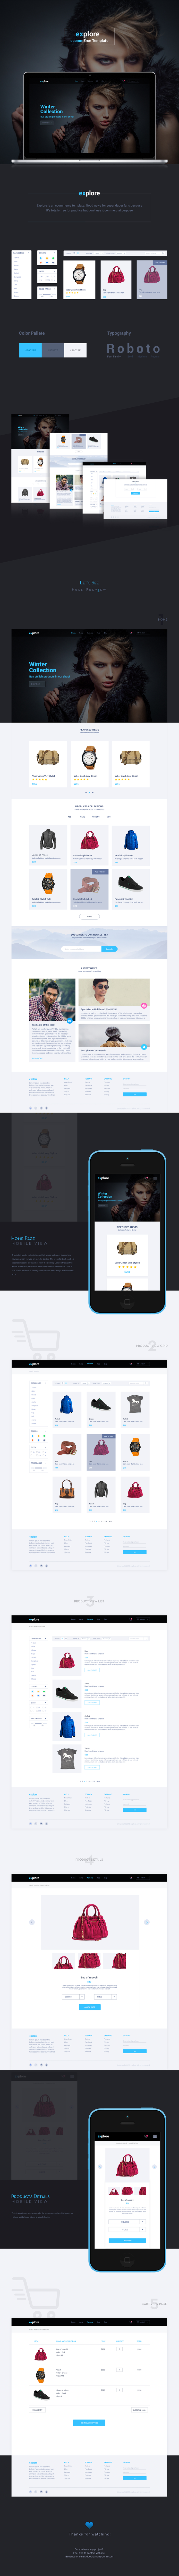 UI ux freebie free psd e-commerce template flat modern clean Website product details Online shop shopping cart